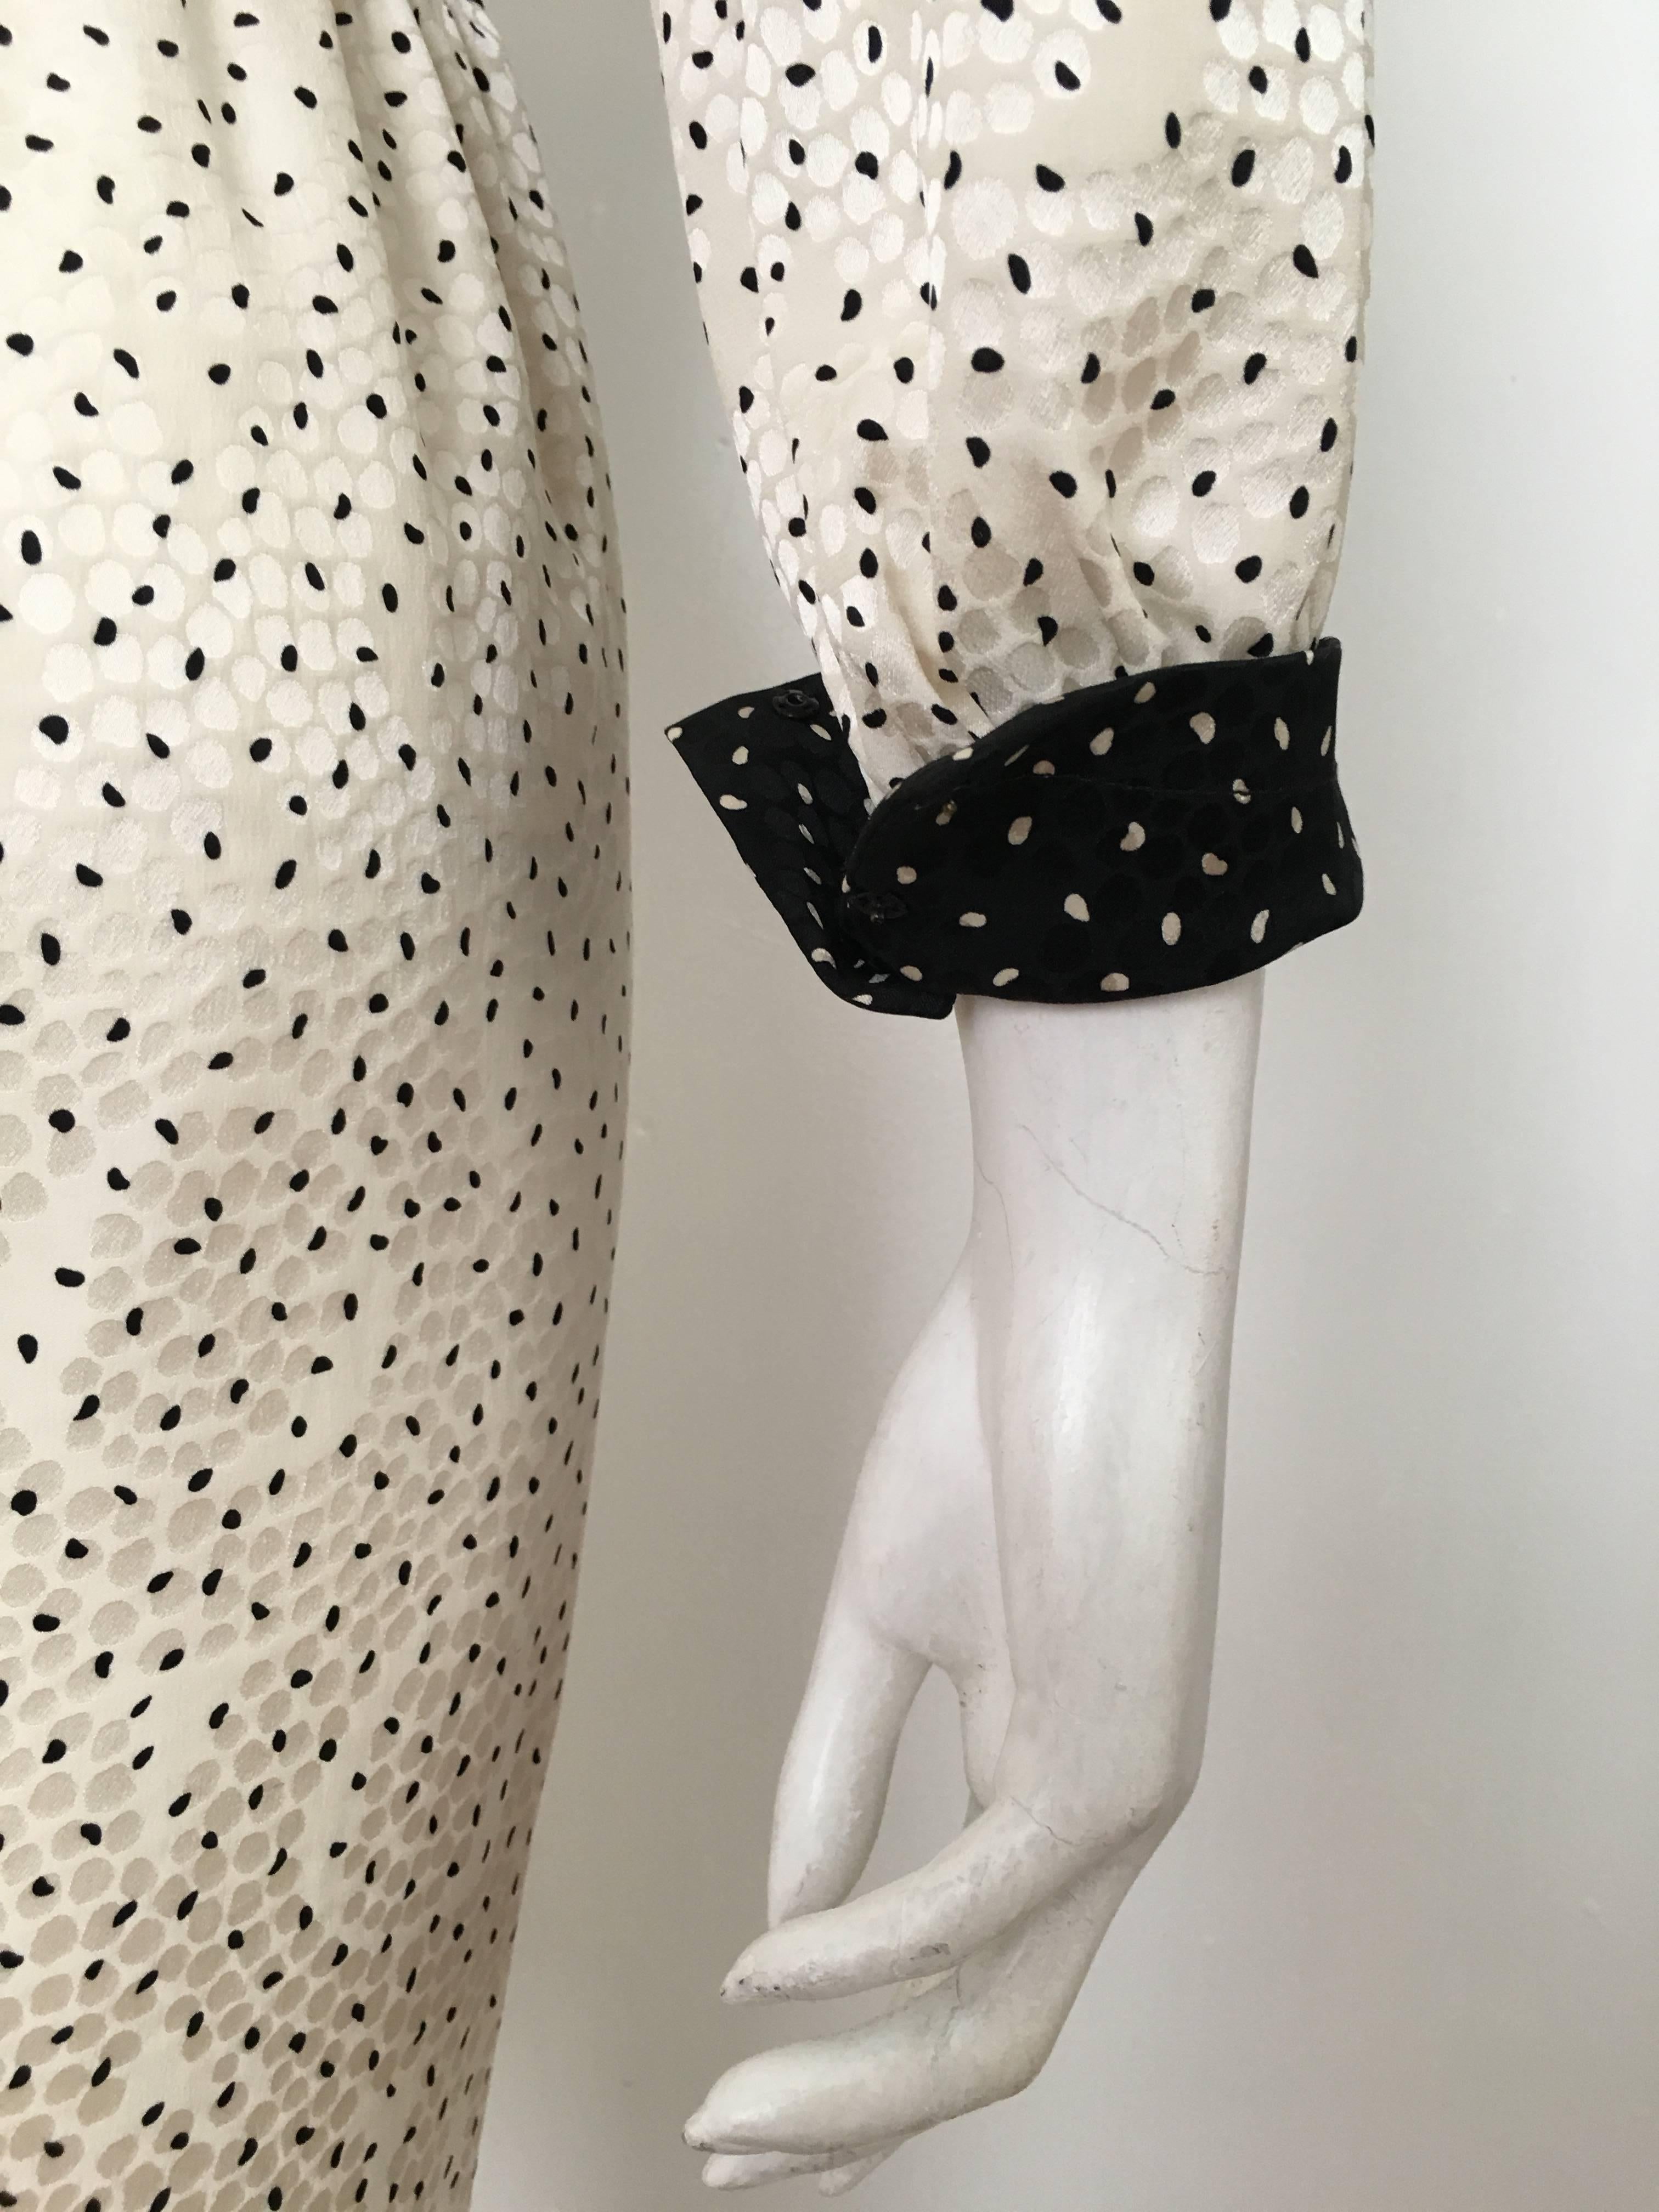 Carolina Herrera 1980s Cream & Black Silk Dress Size 6. 2